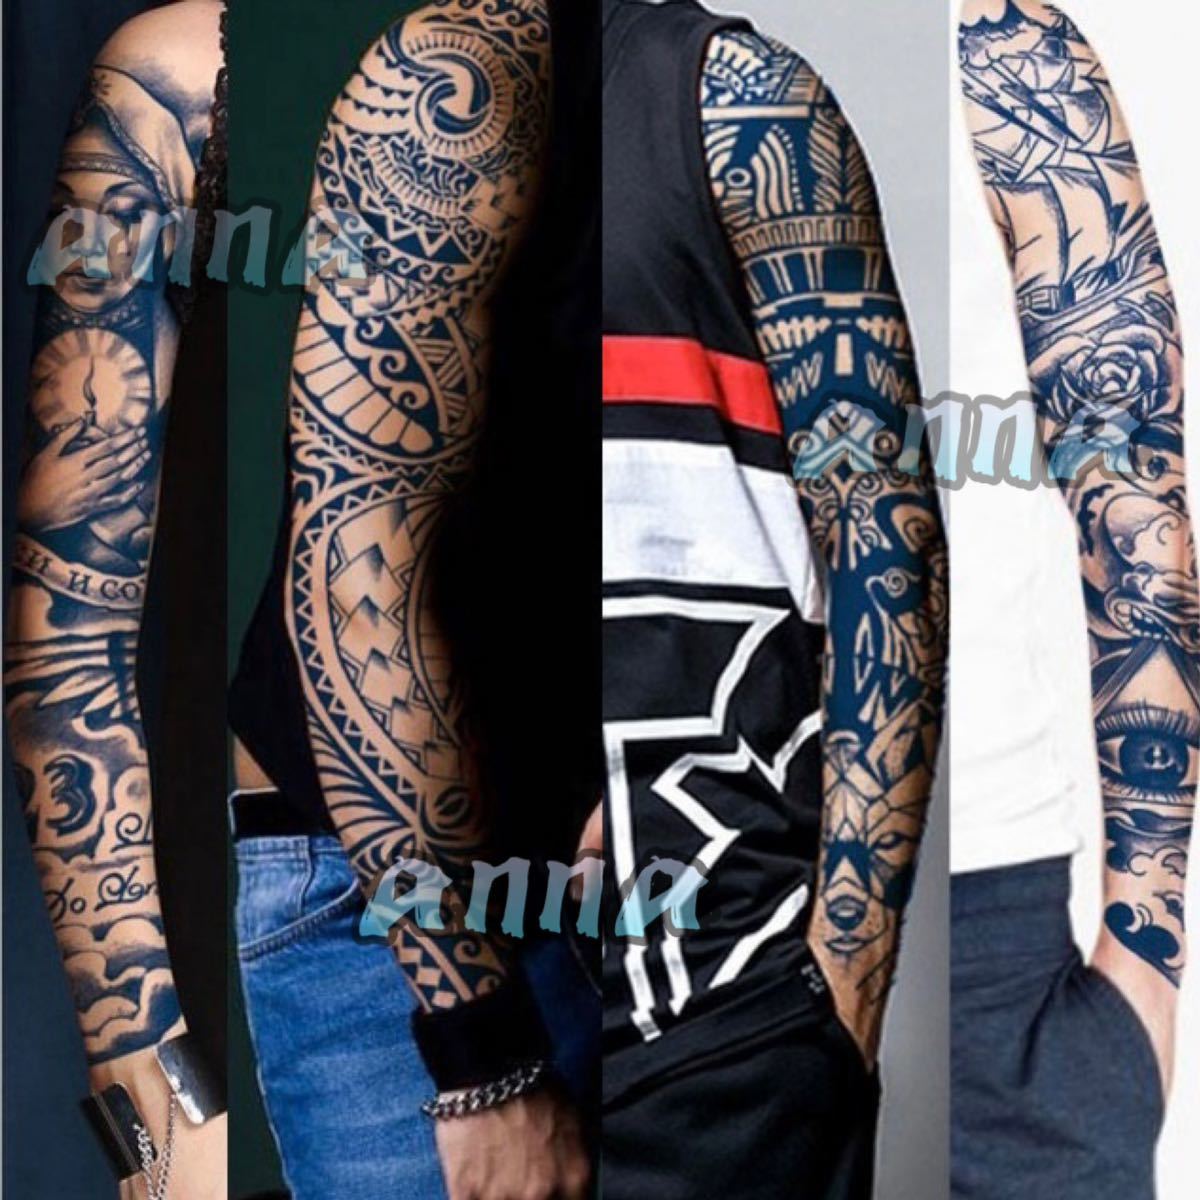 2 week . disappears 17 arm pair large scale henna ta toe Jug a tattoo seal tattoo seal tinto tattoo seal body art seal 